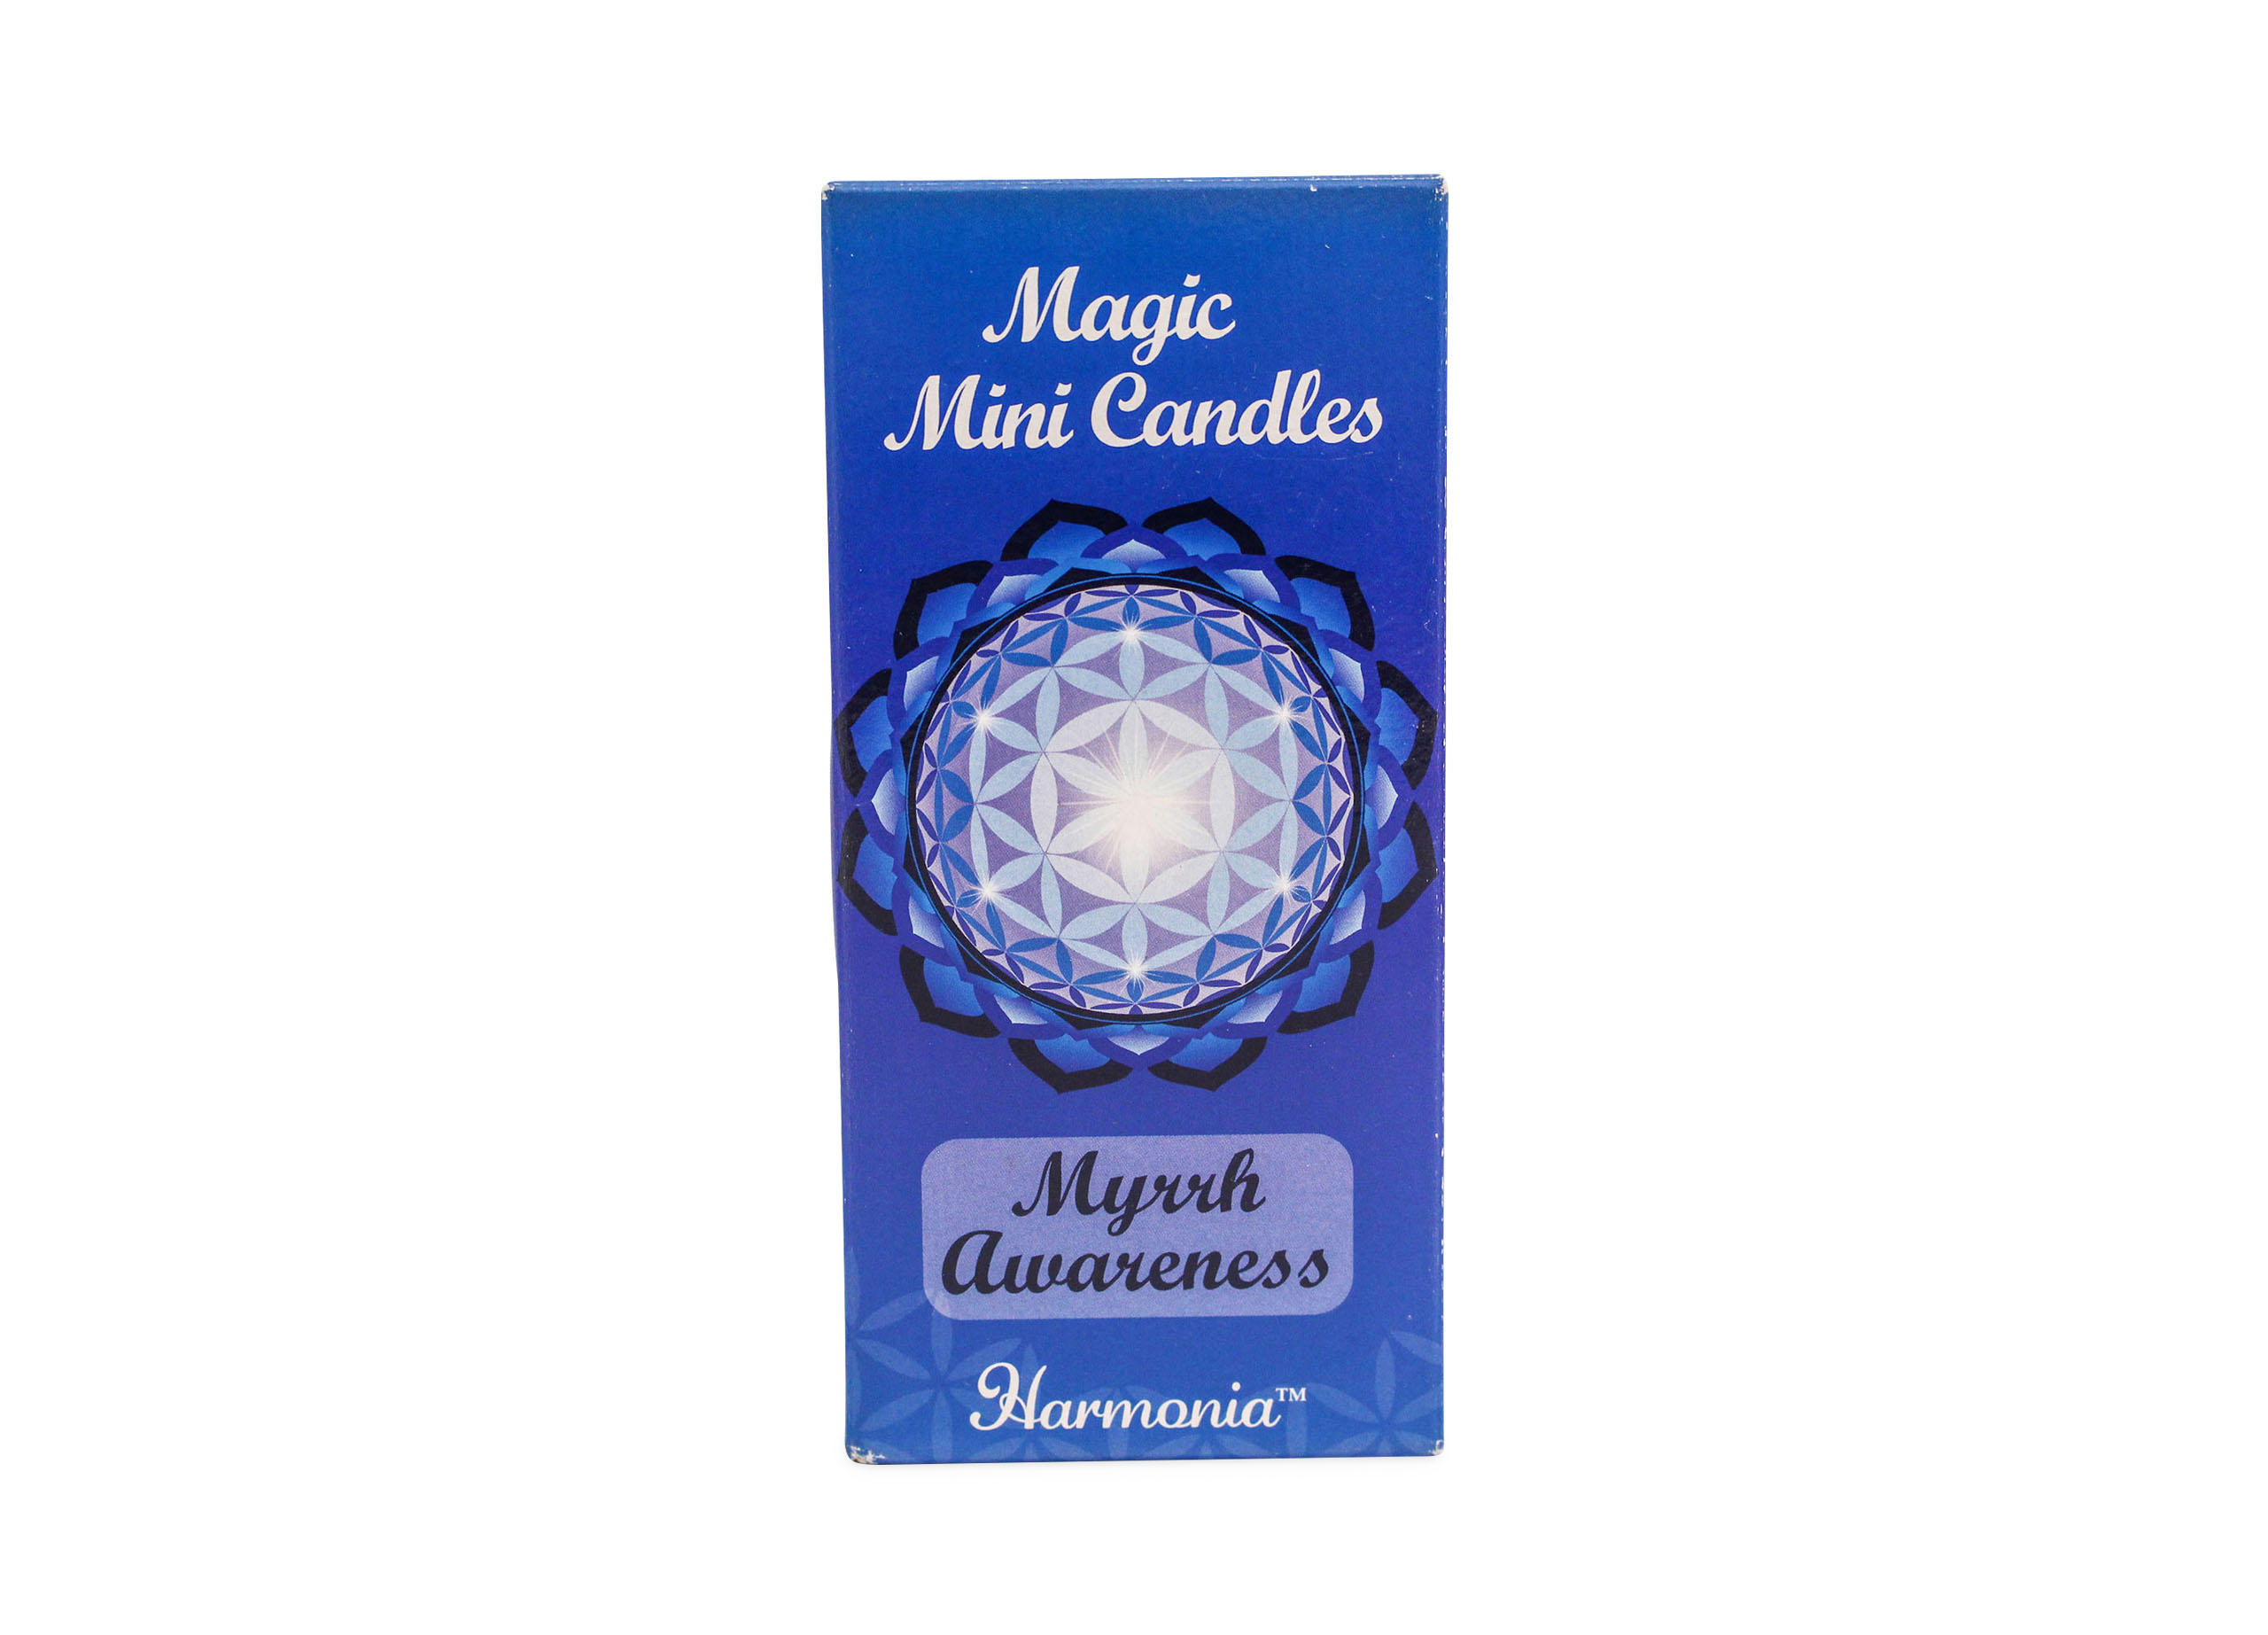 Myrrh/Awarness Magic Mini Candles - Crystal Dreams